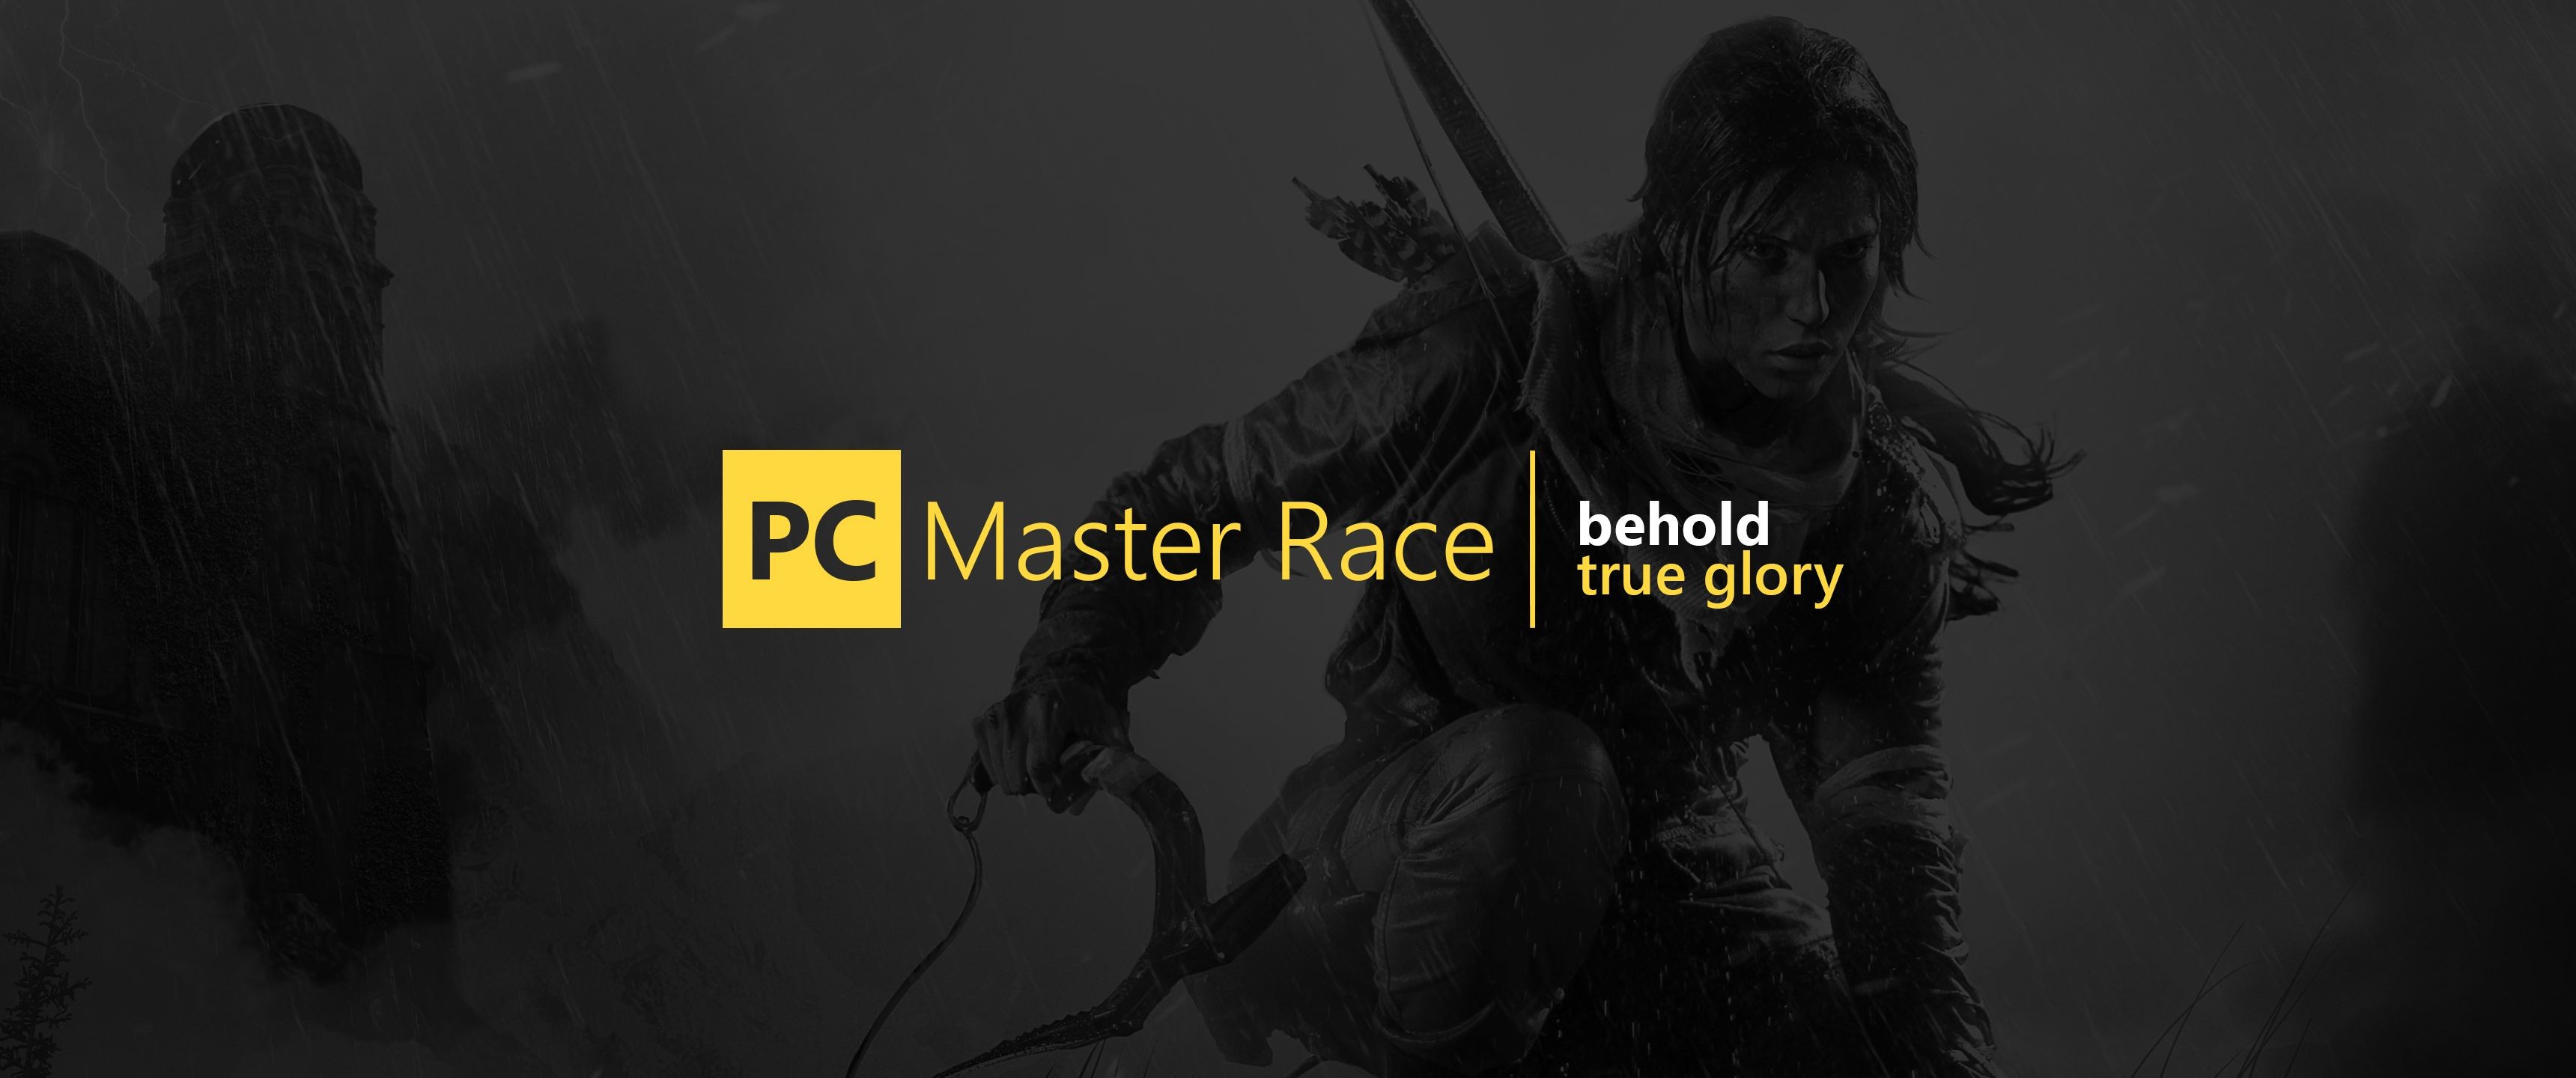 Lara Croft, PC gaming, PC Master  Race, Tomb Raider Wallpaper